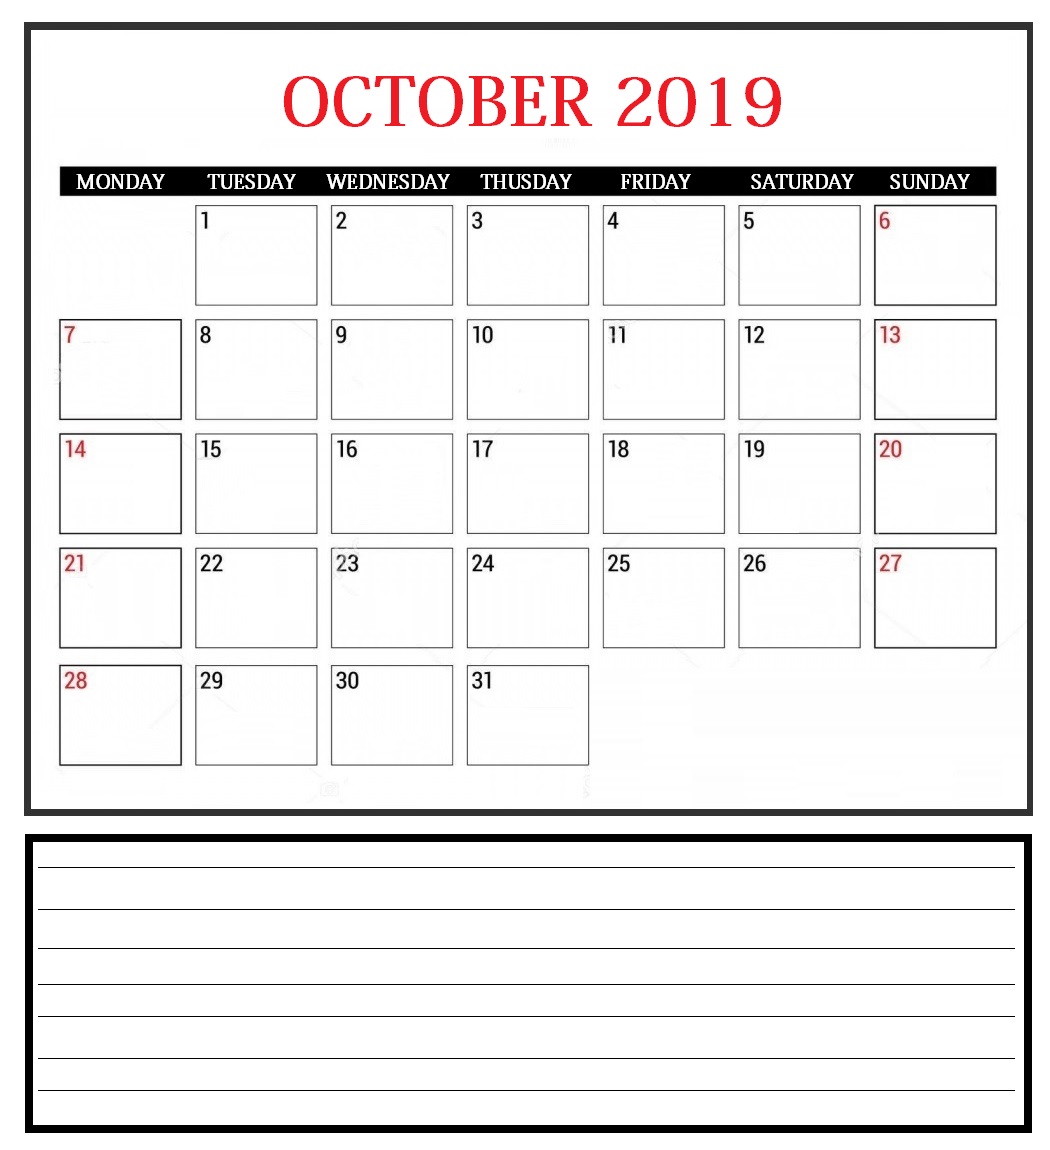 Personalized October 2019 Calendar